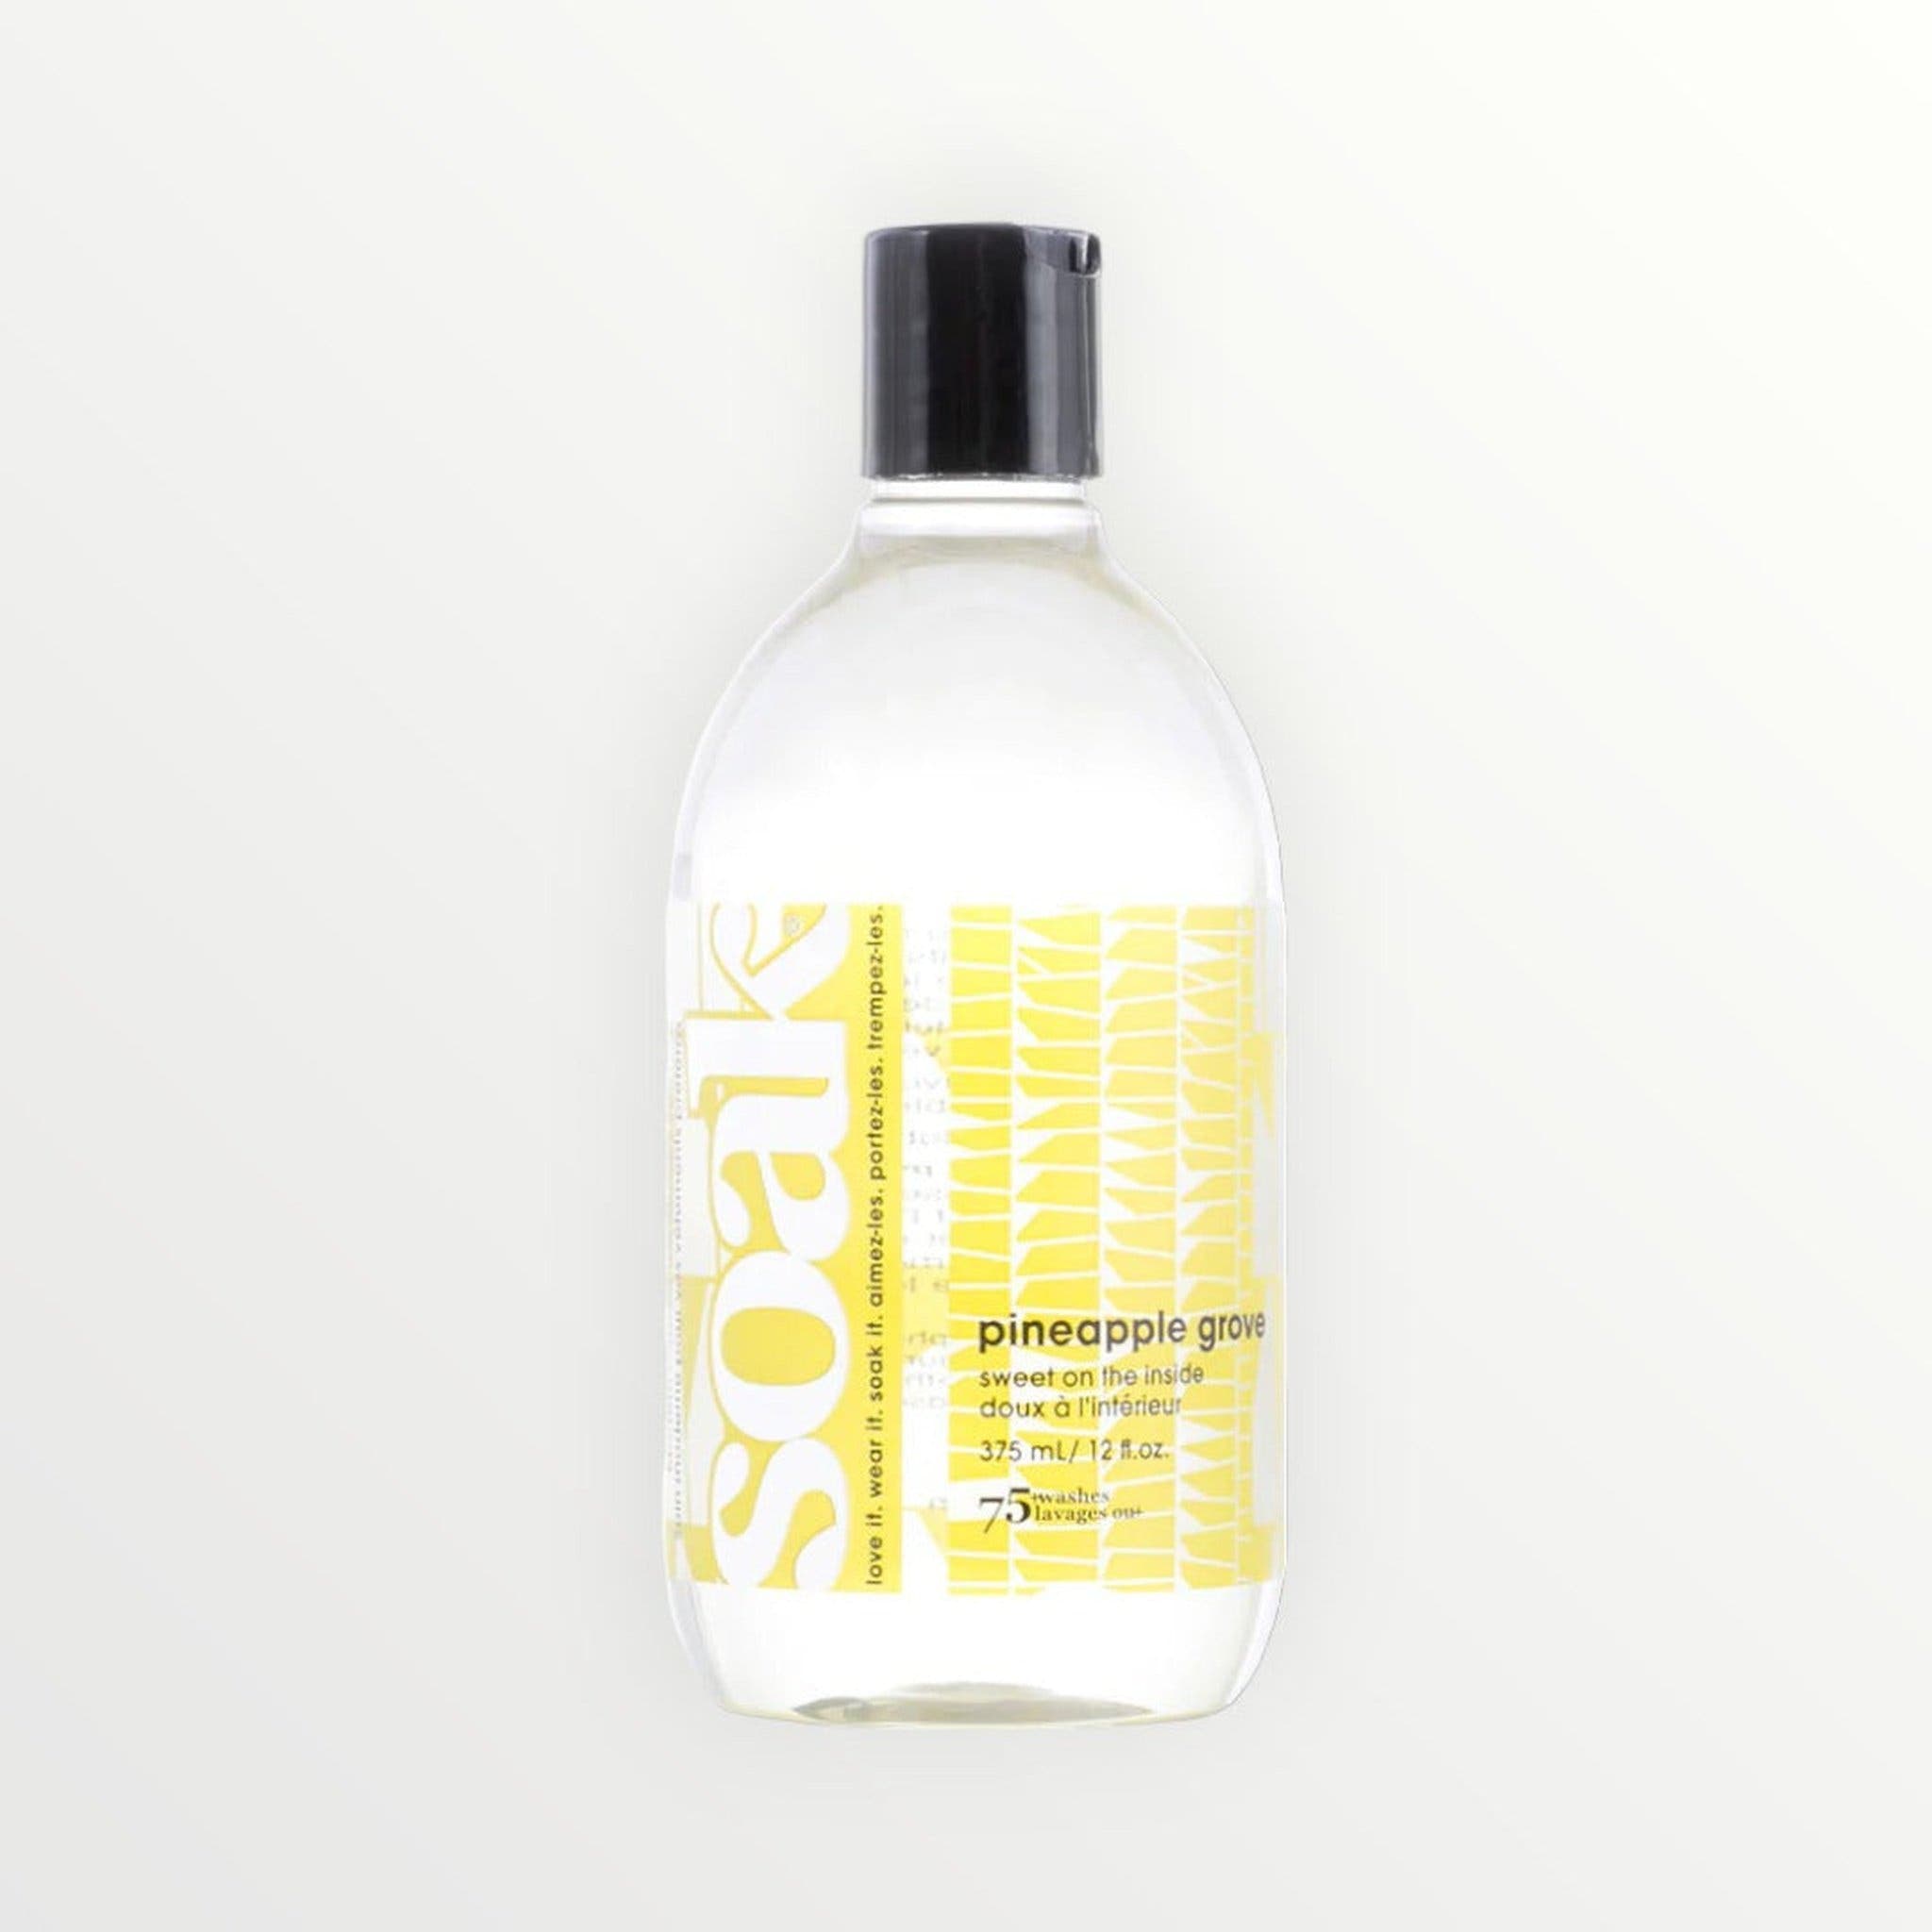 SOAK Lingerie Wash in Pineapple Grove Scent, 12 oz Bottle